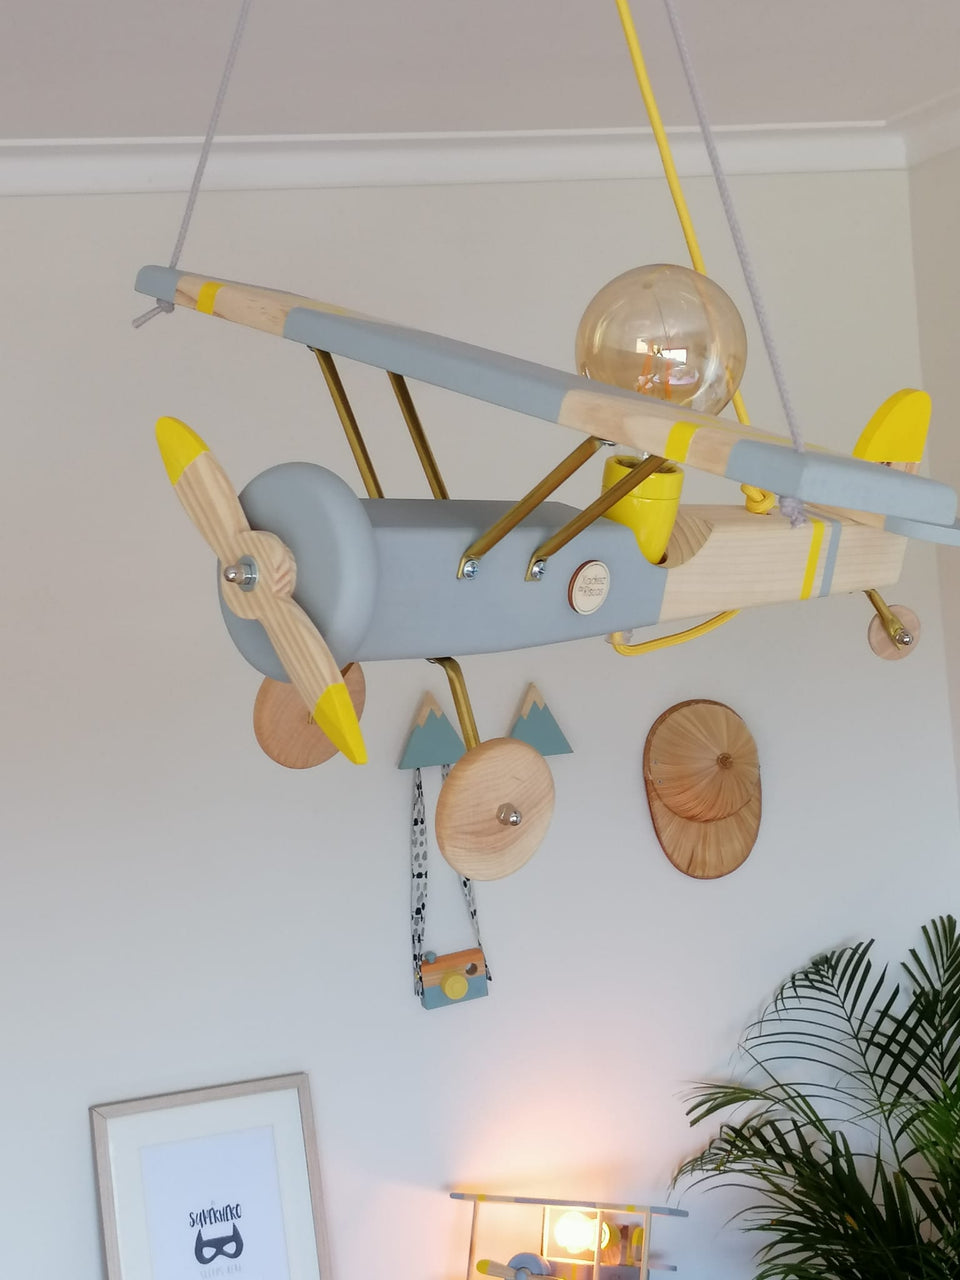 Candeeiro Avião Tecto Amarelo - Ceiling wood Airplane Lamp Yellow